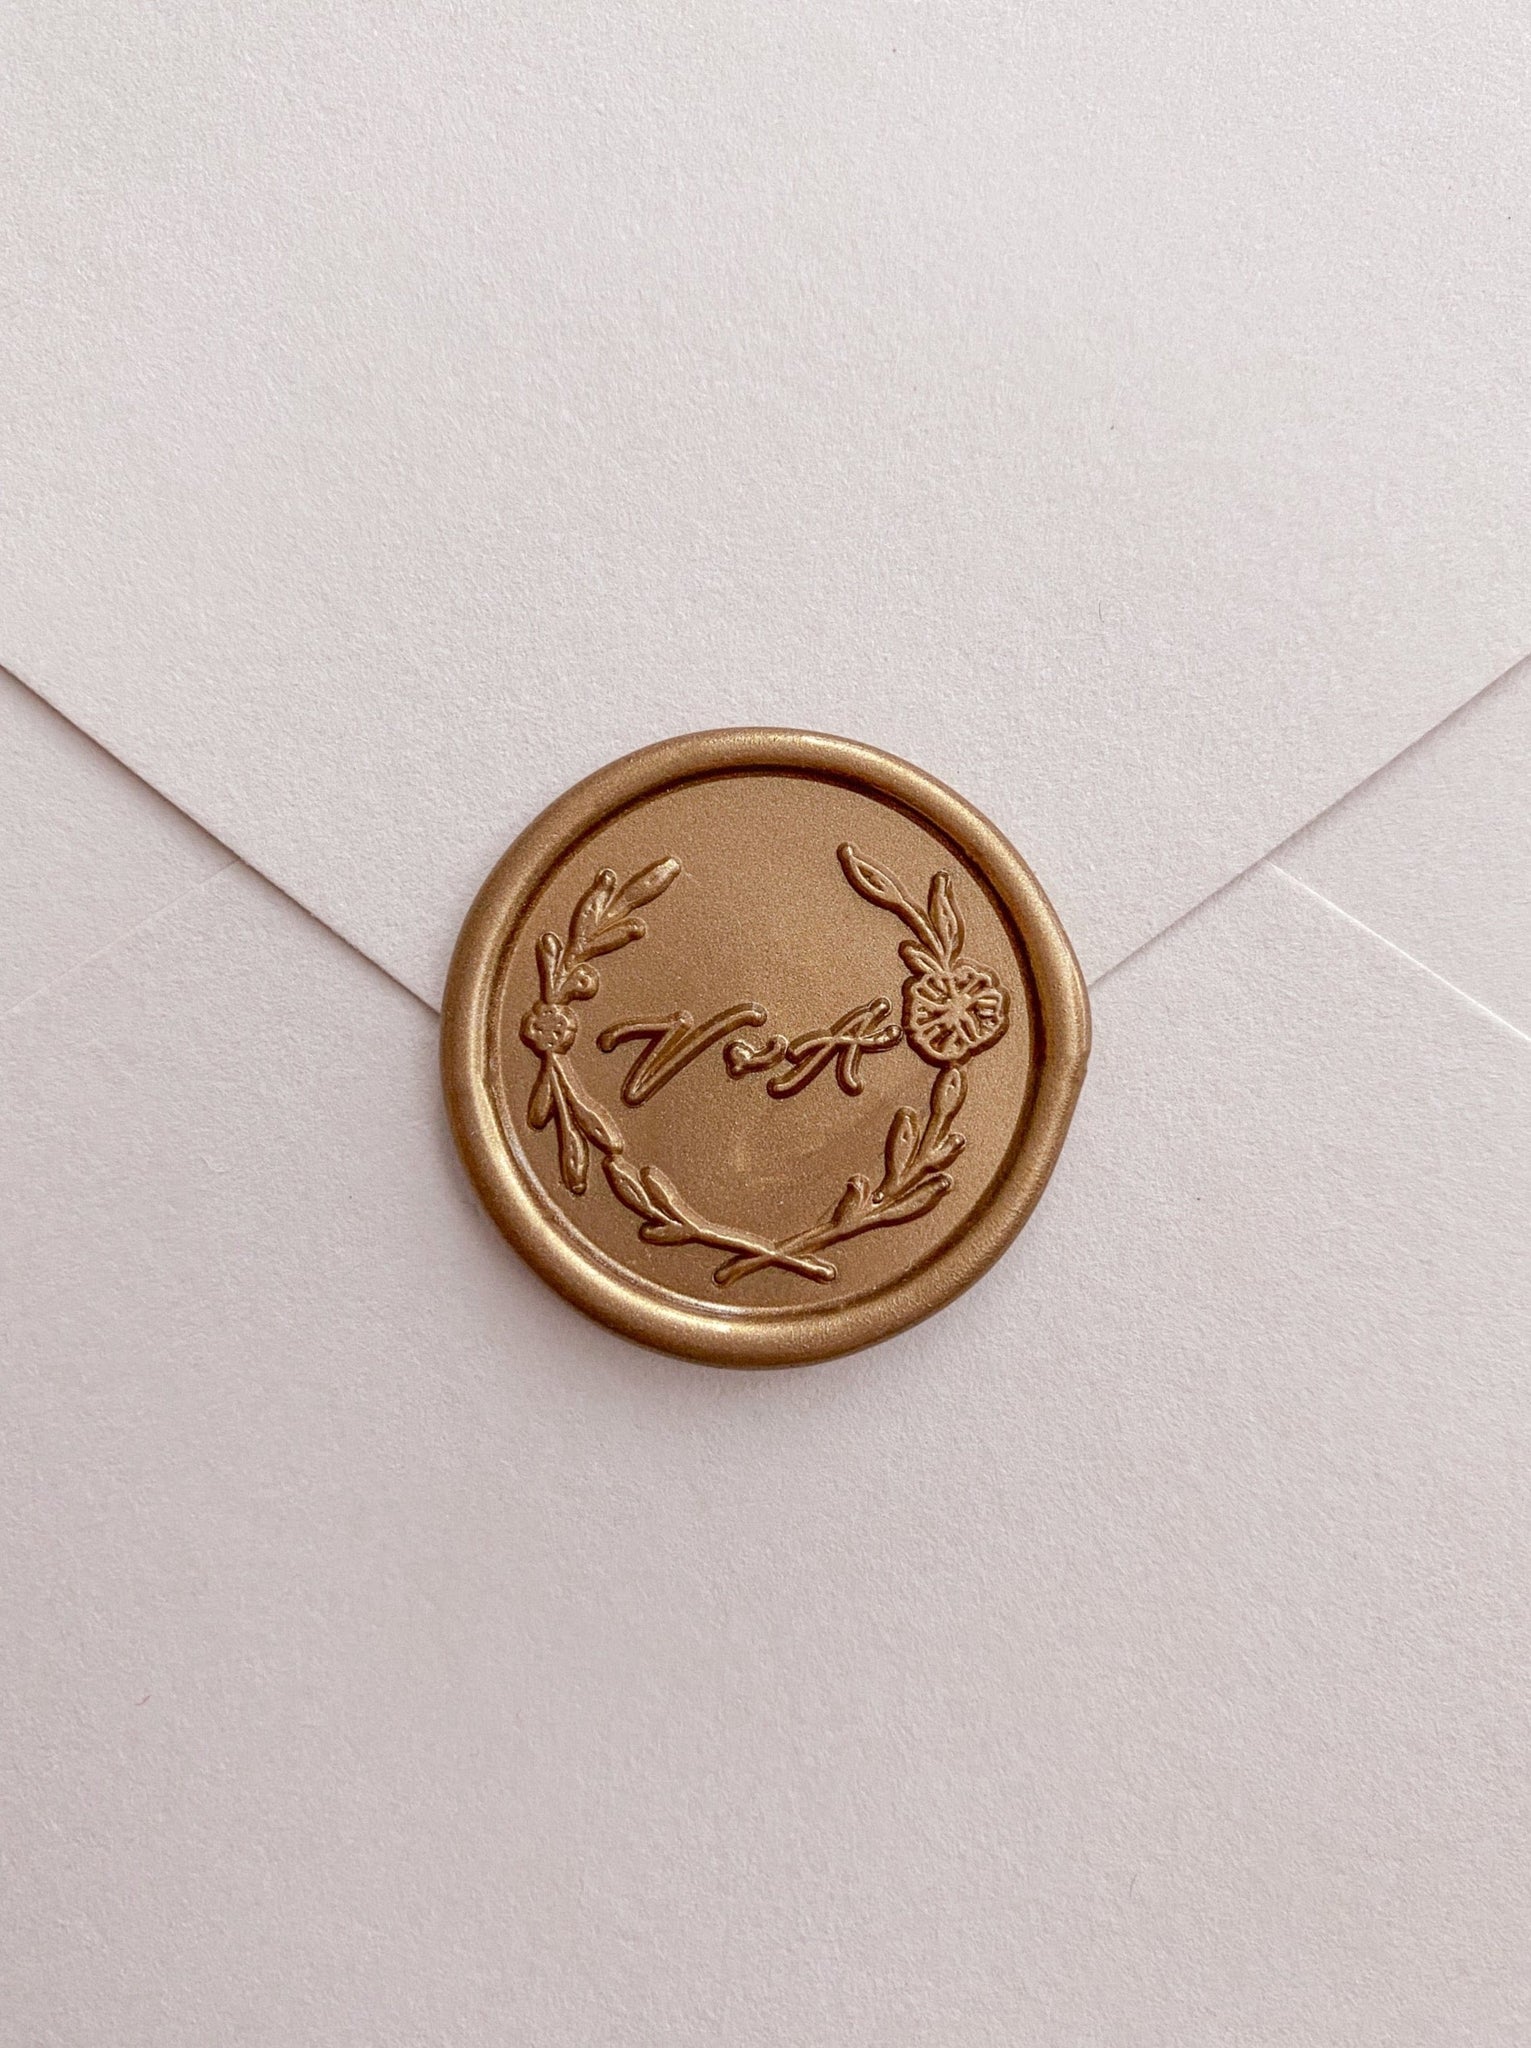 Floral leaf wreath monogram gold wax seal on beige card stock envelope 